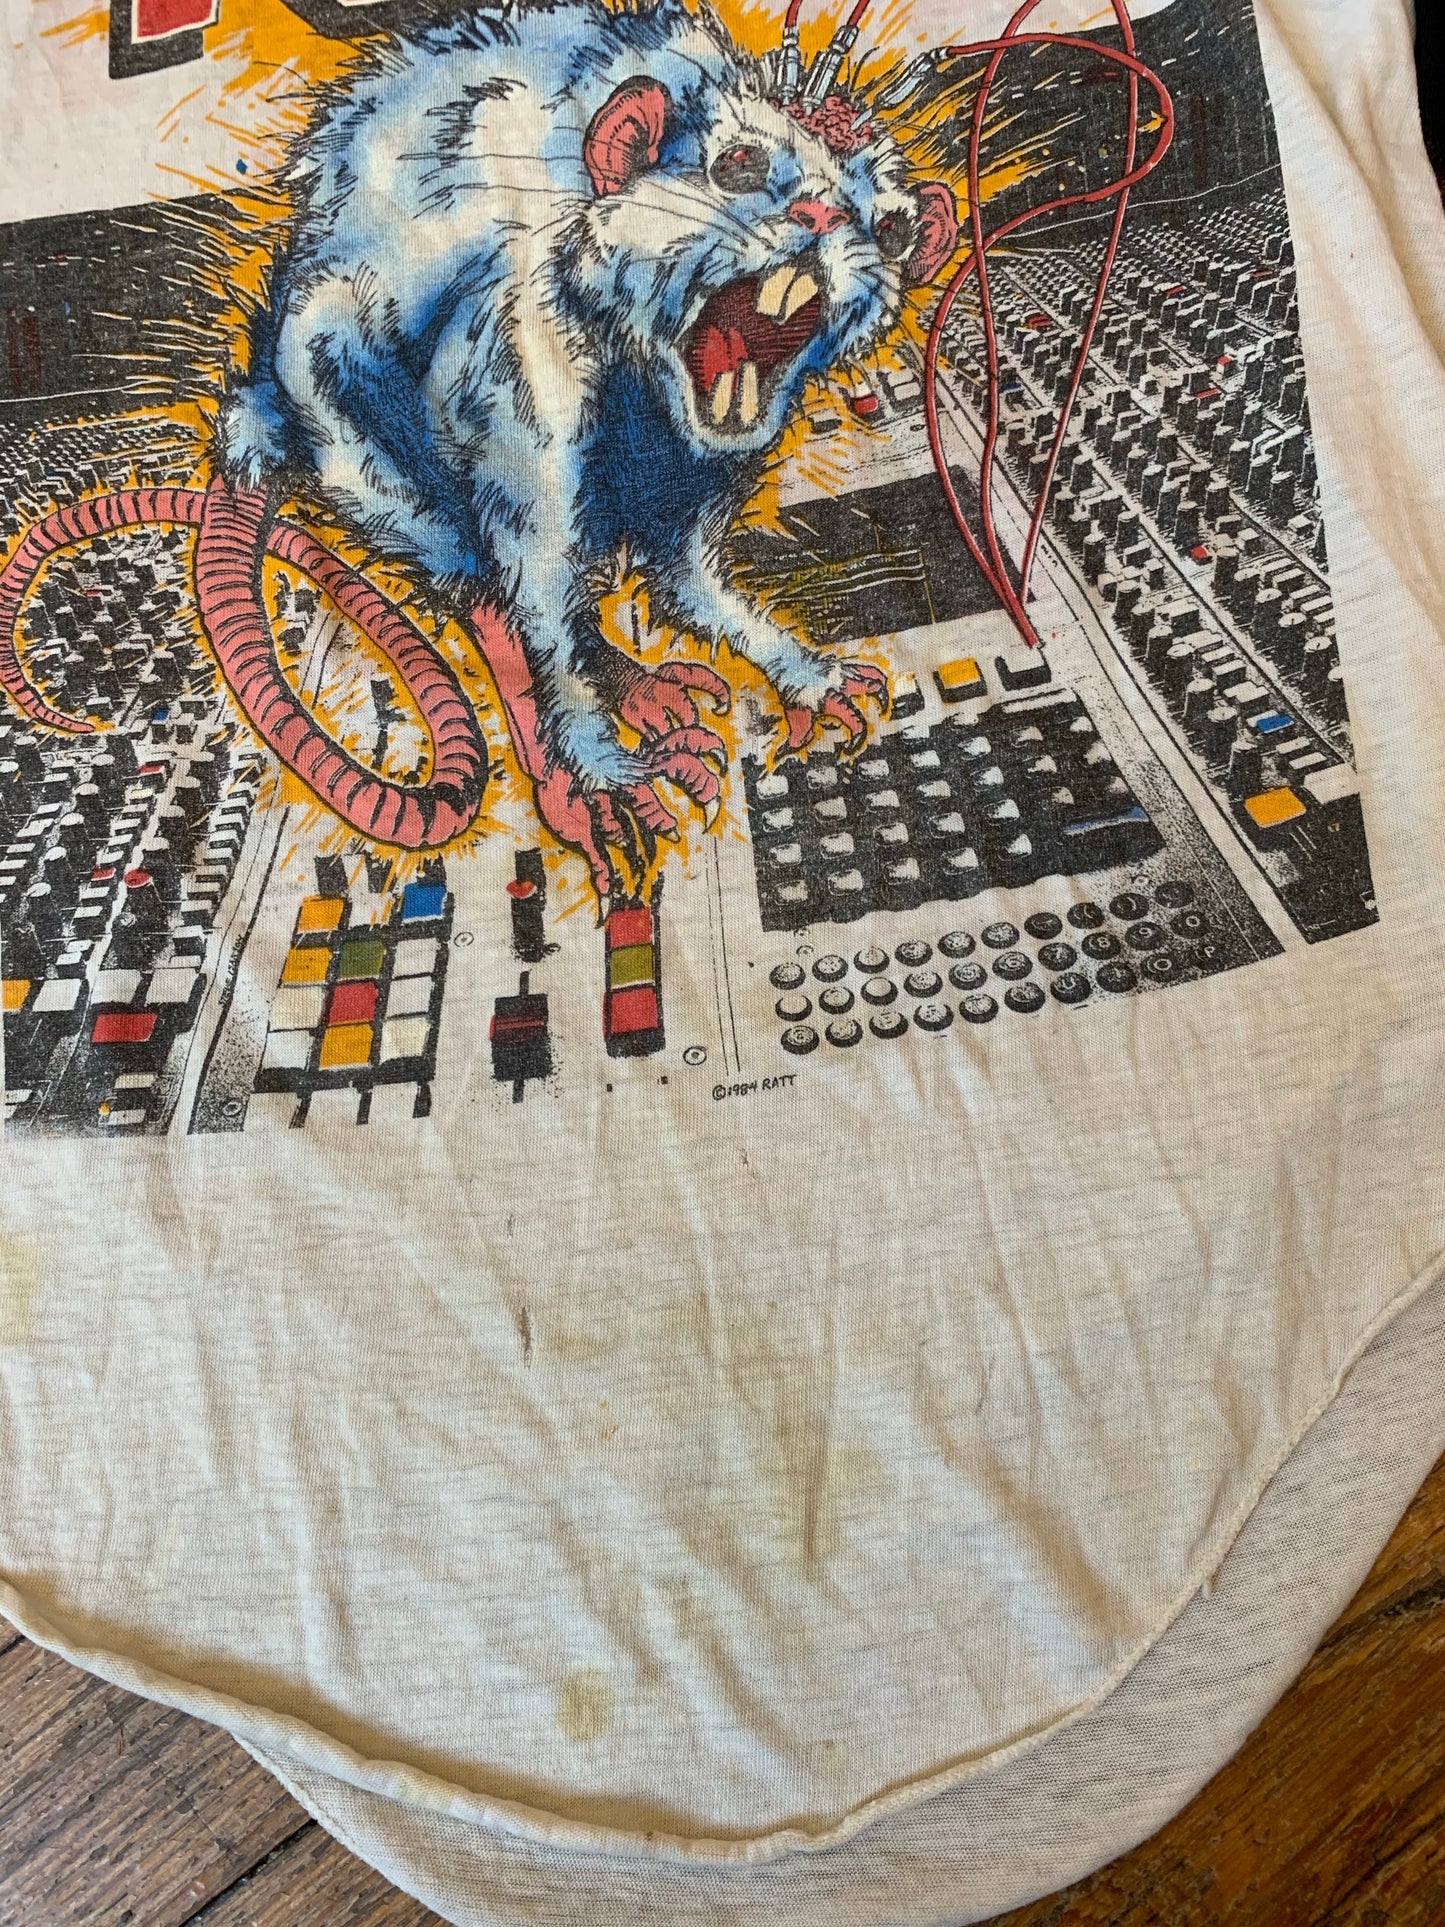 Vintage 1984 Ratt ‘Ratt ‘n’ Roll’ Tour Raglan T-Shirt